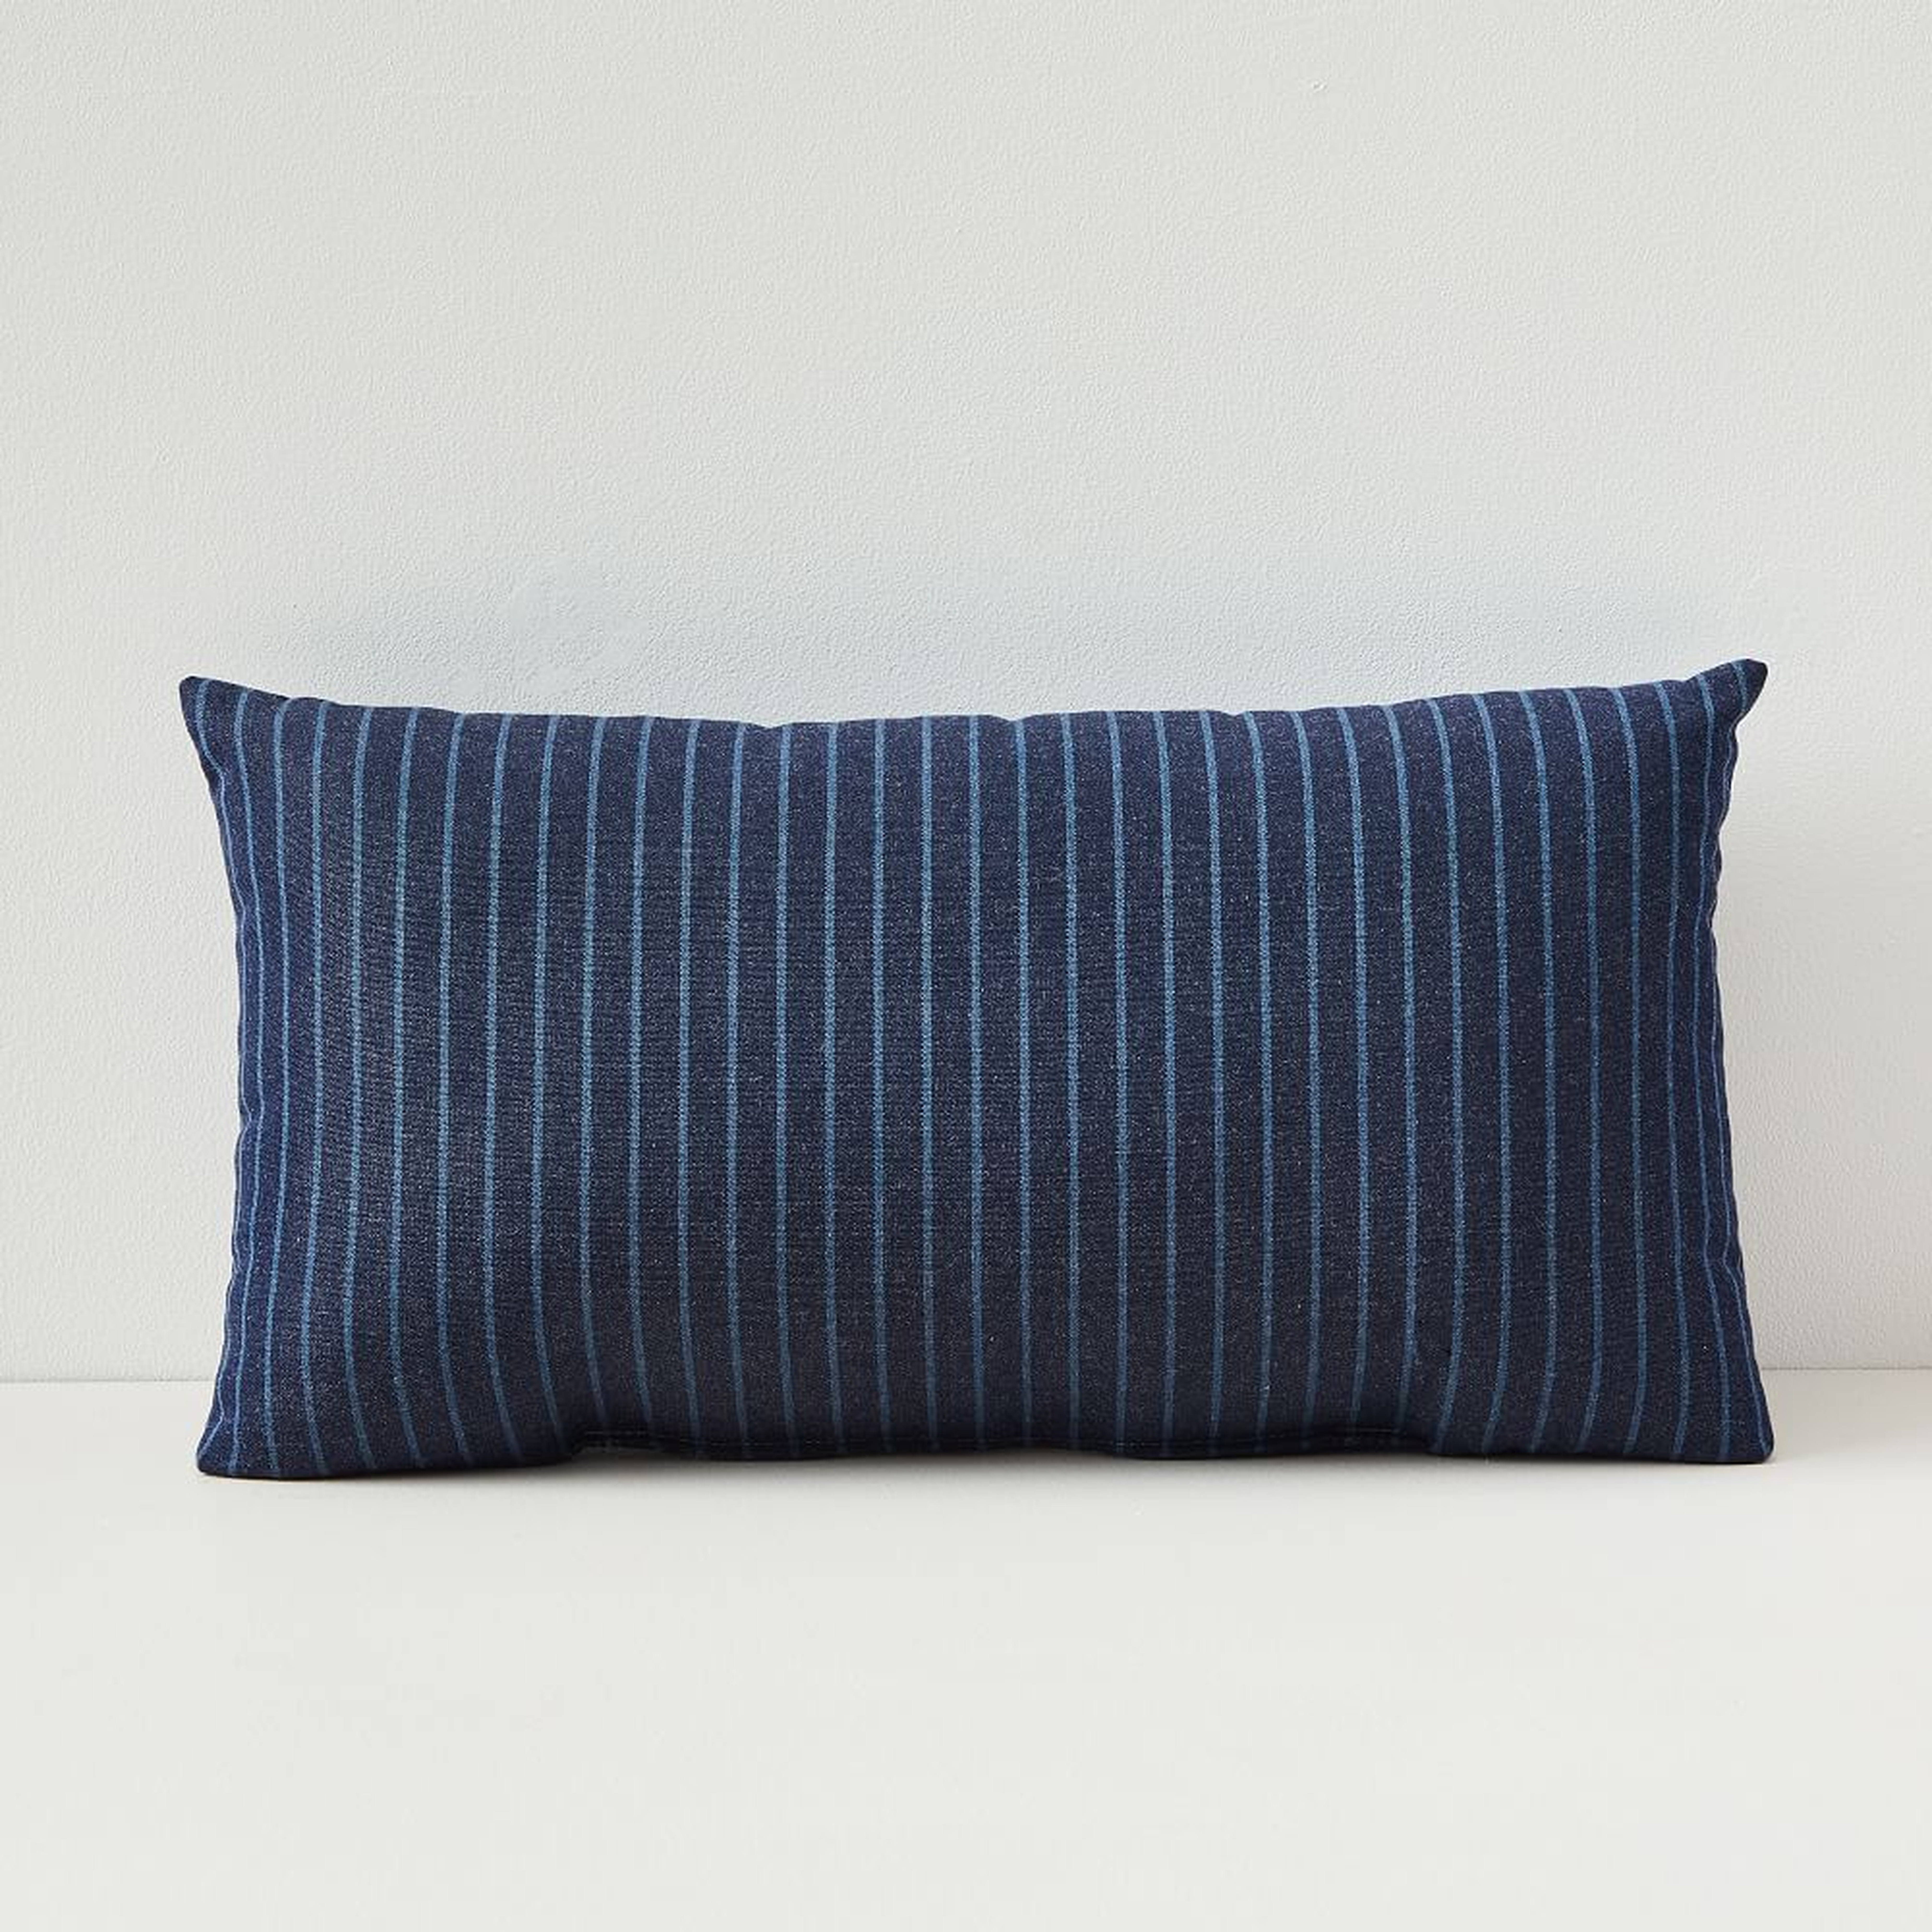 Sunbrella Indoor/Outdoor Striped Lumbar Pillow, Indigo, 12"x21" - West Elm